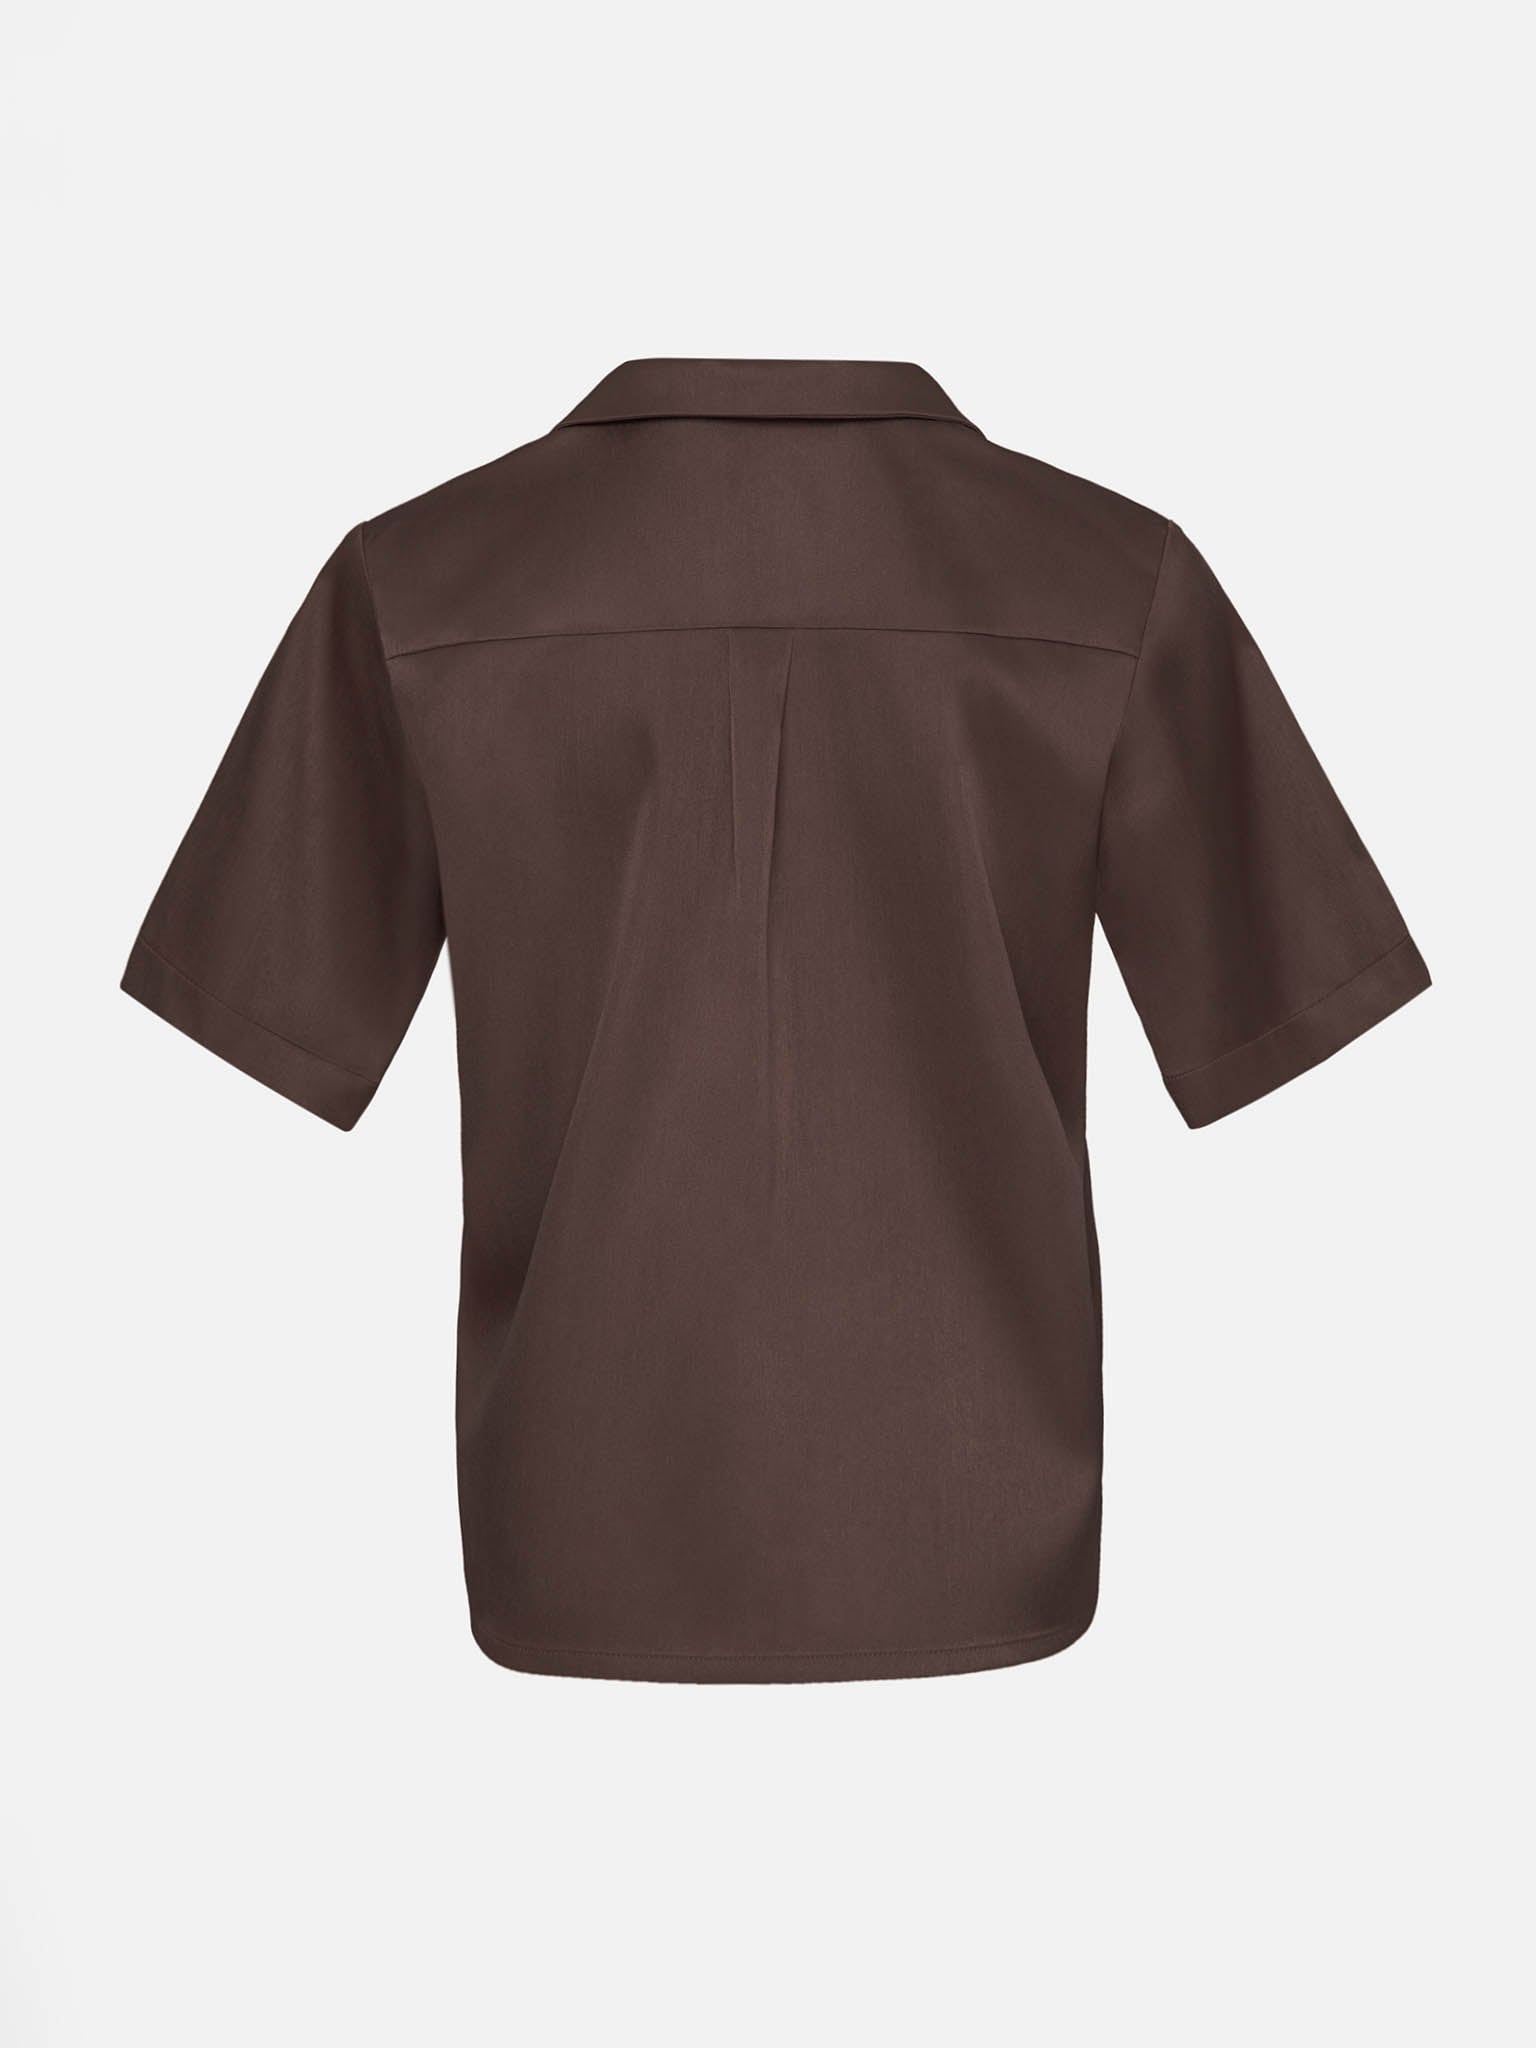 Flowing short-sleeve blouse